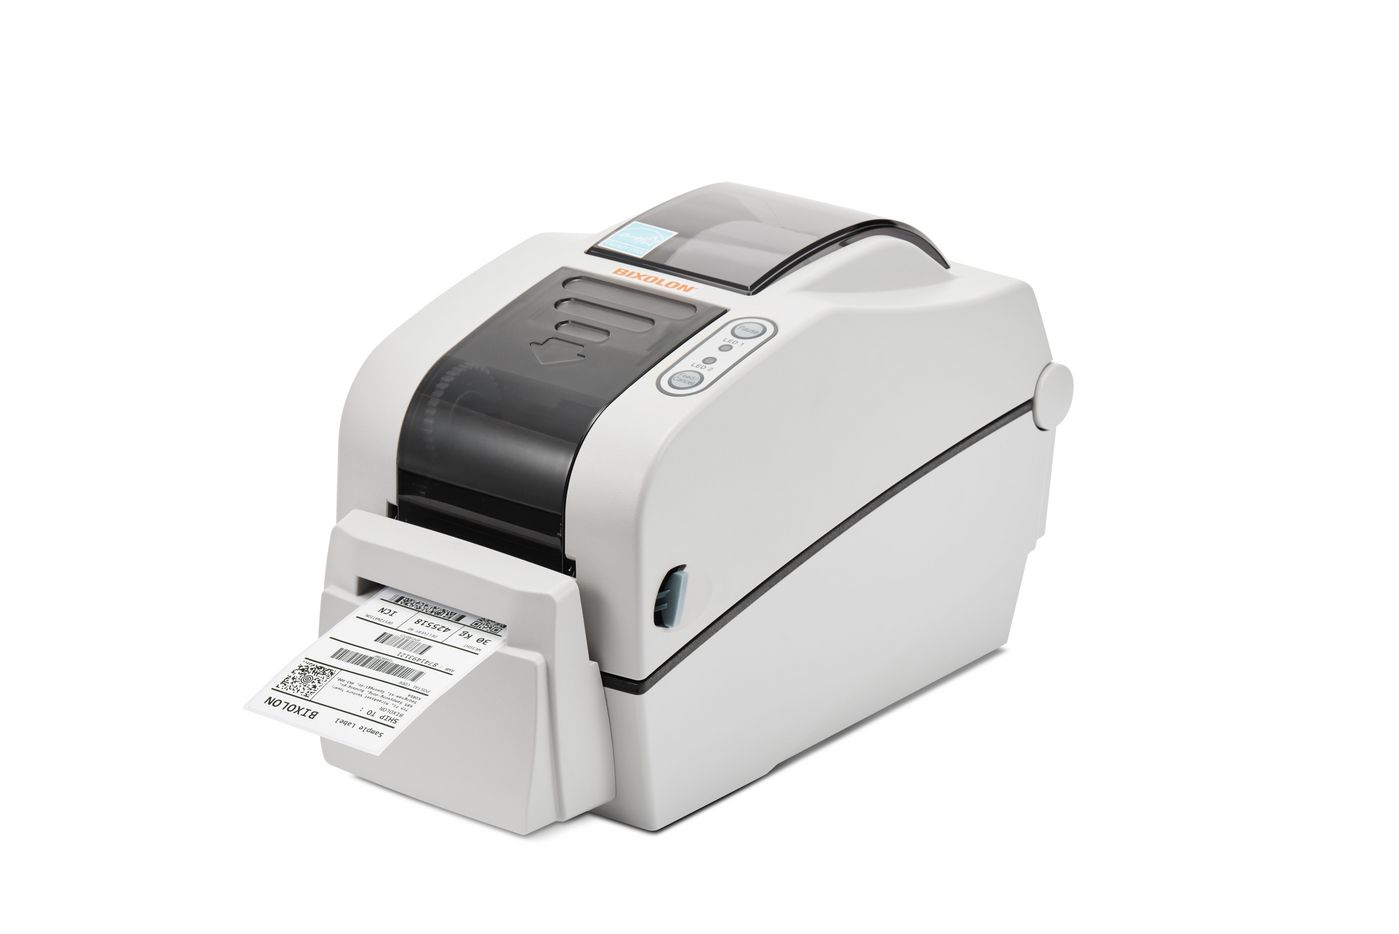 Slp-tx220ce -  Label Printer - Direct Thermal - USB / Parallel